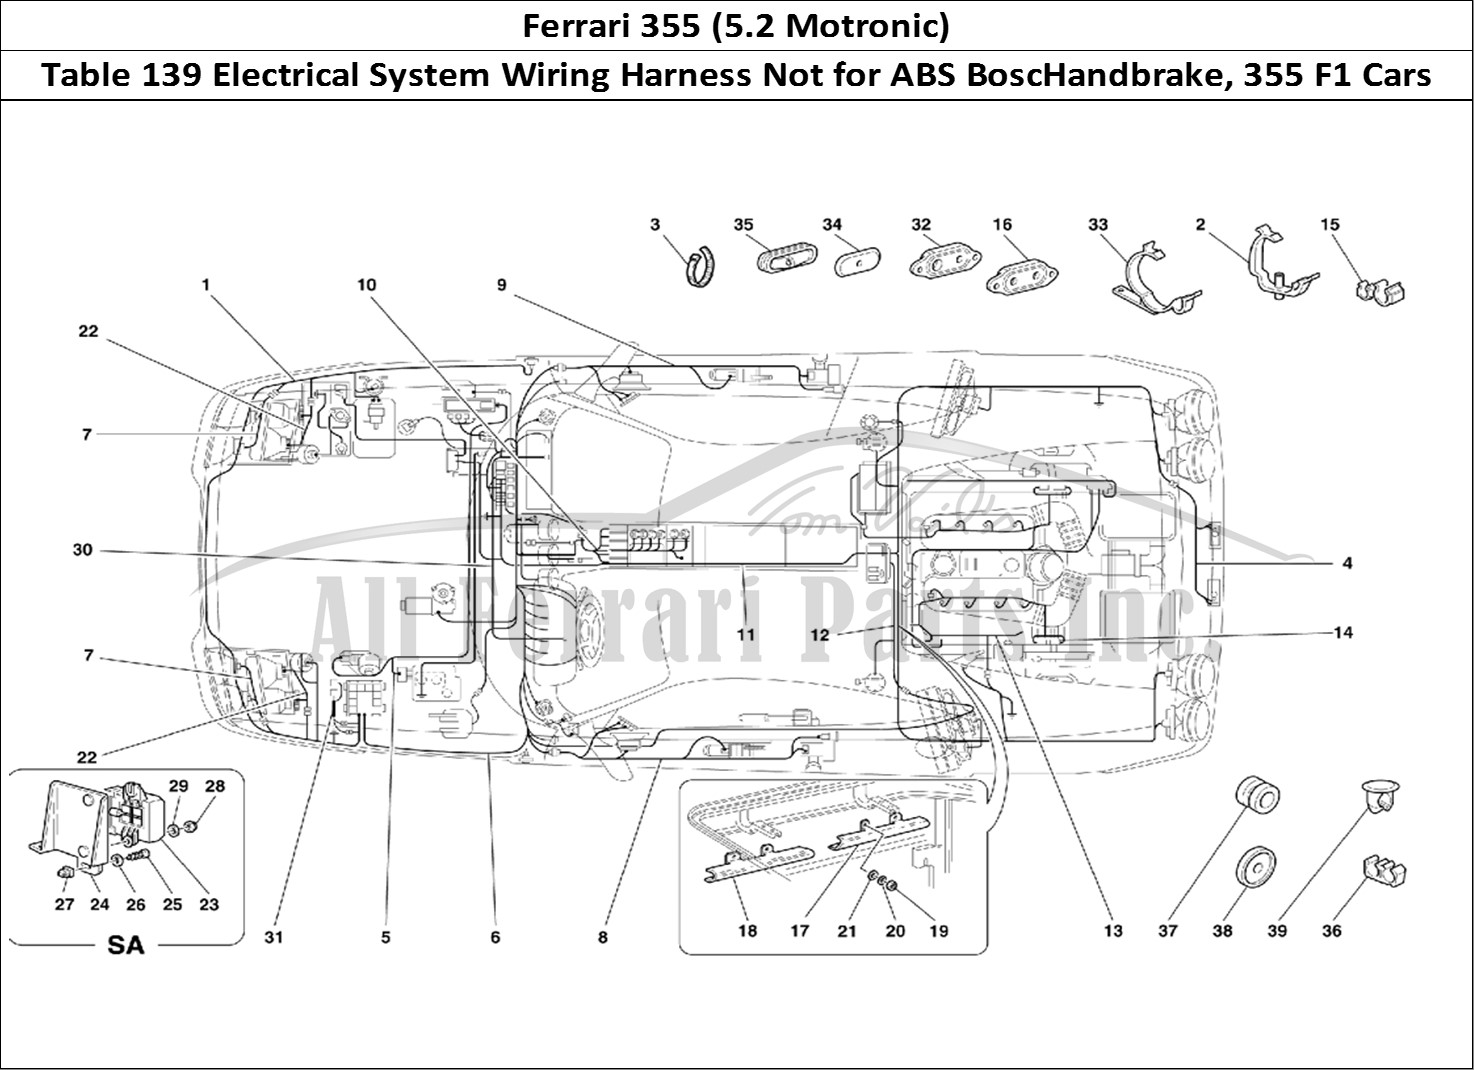 Ferrari Parts Ferrari 355 (5.2 Motronic) Page 139 Electrical System -Not fo